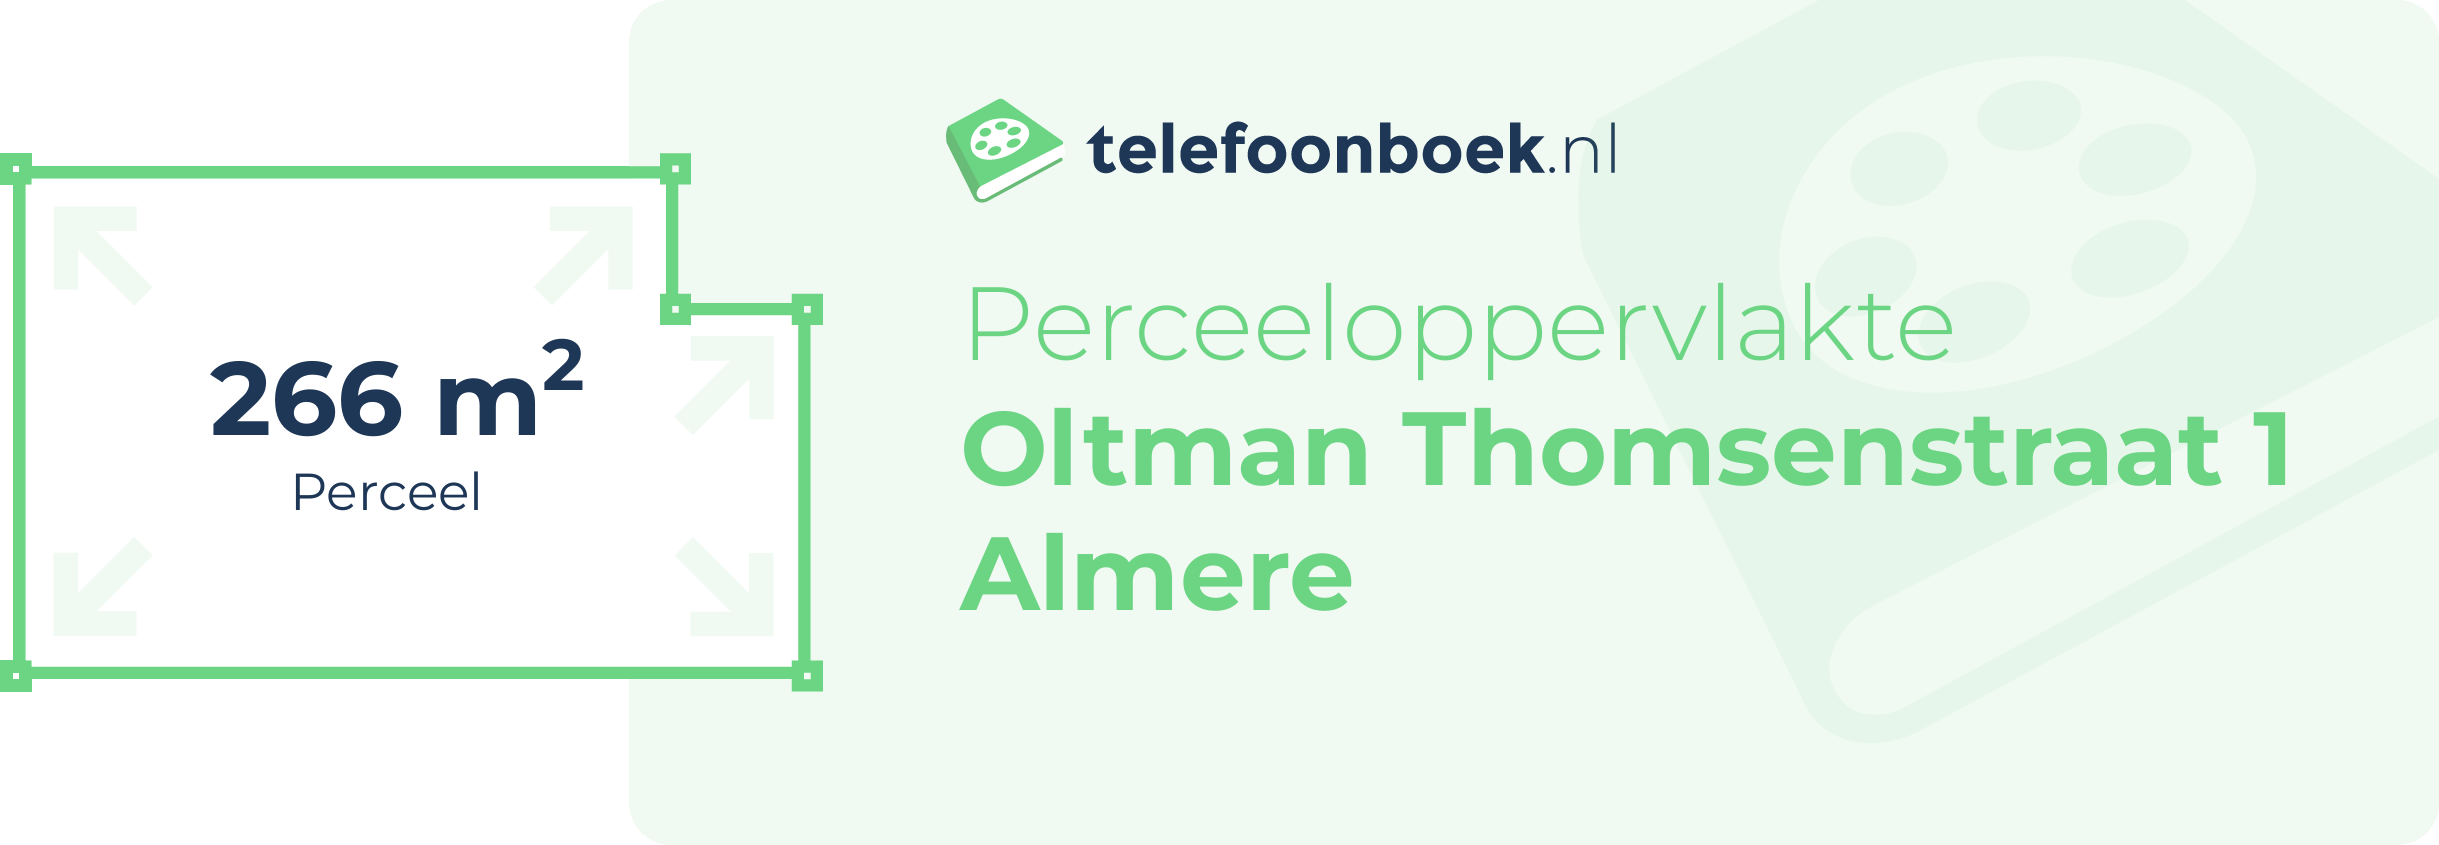 Perceeloppervlakte Oltman Thomsenstraat 1 Almere